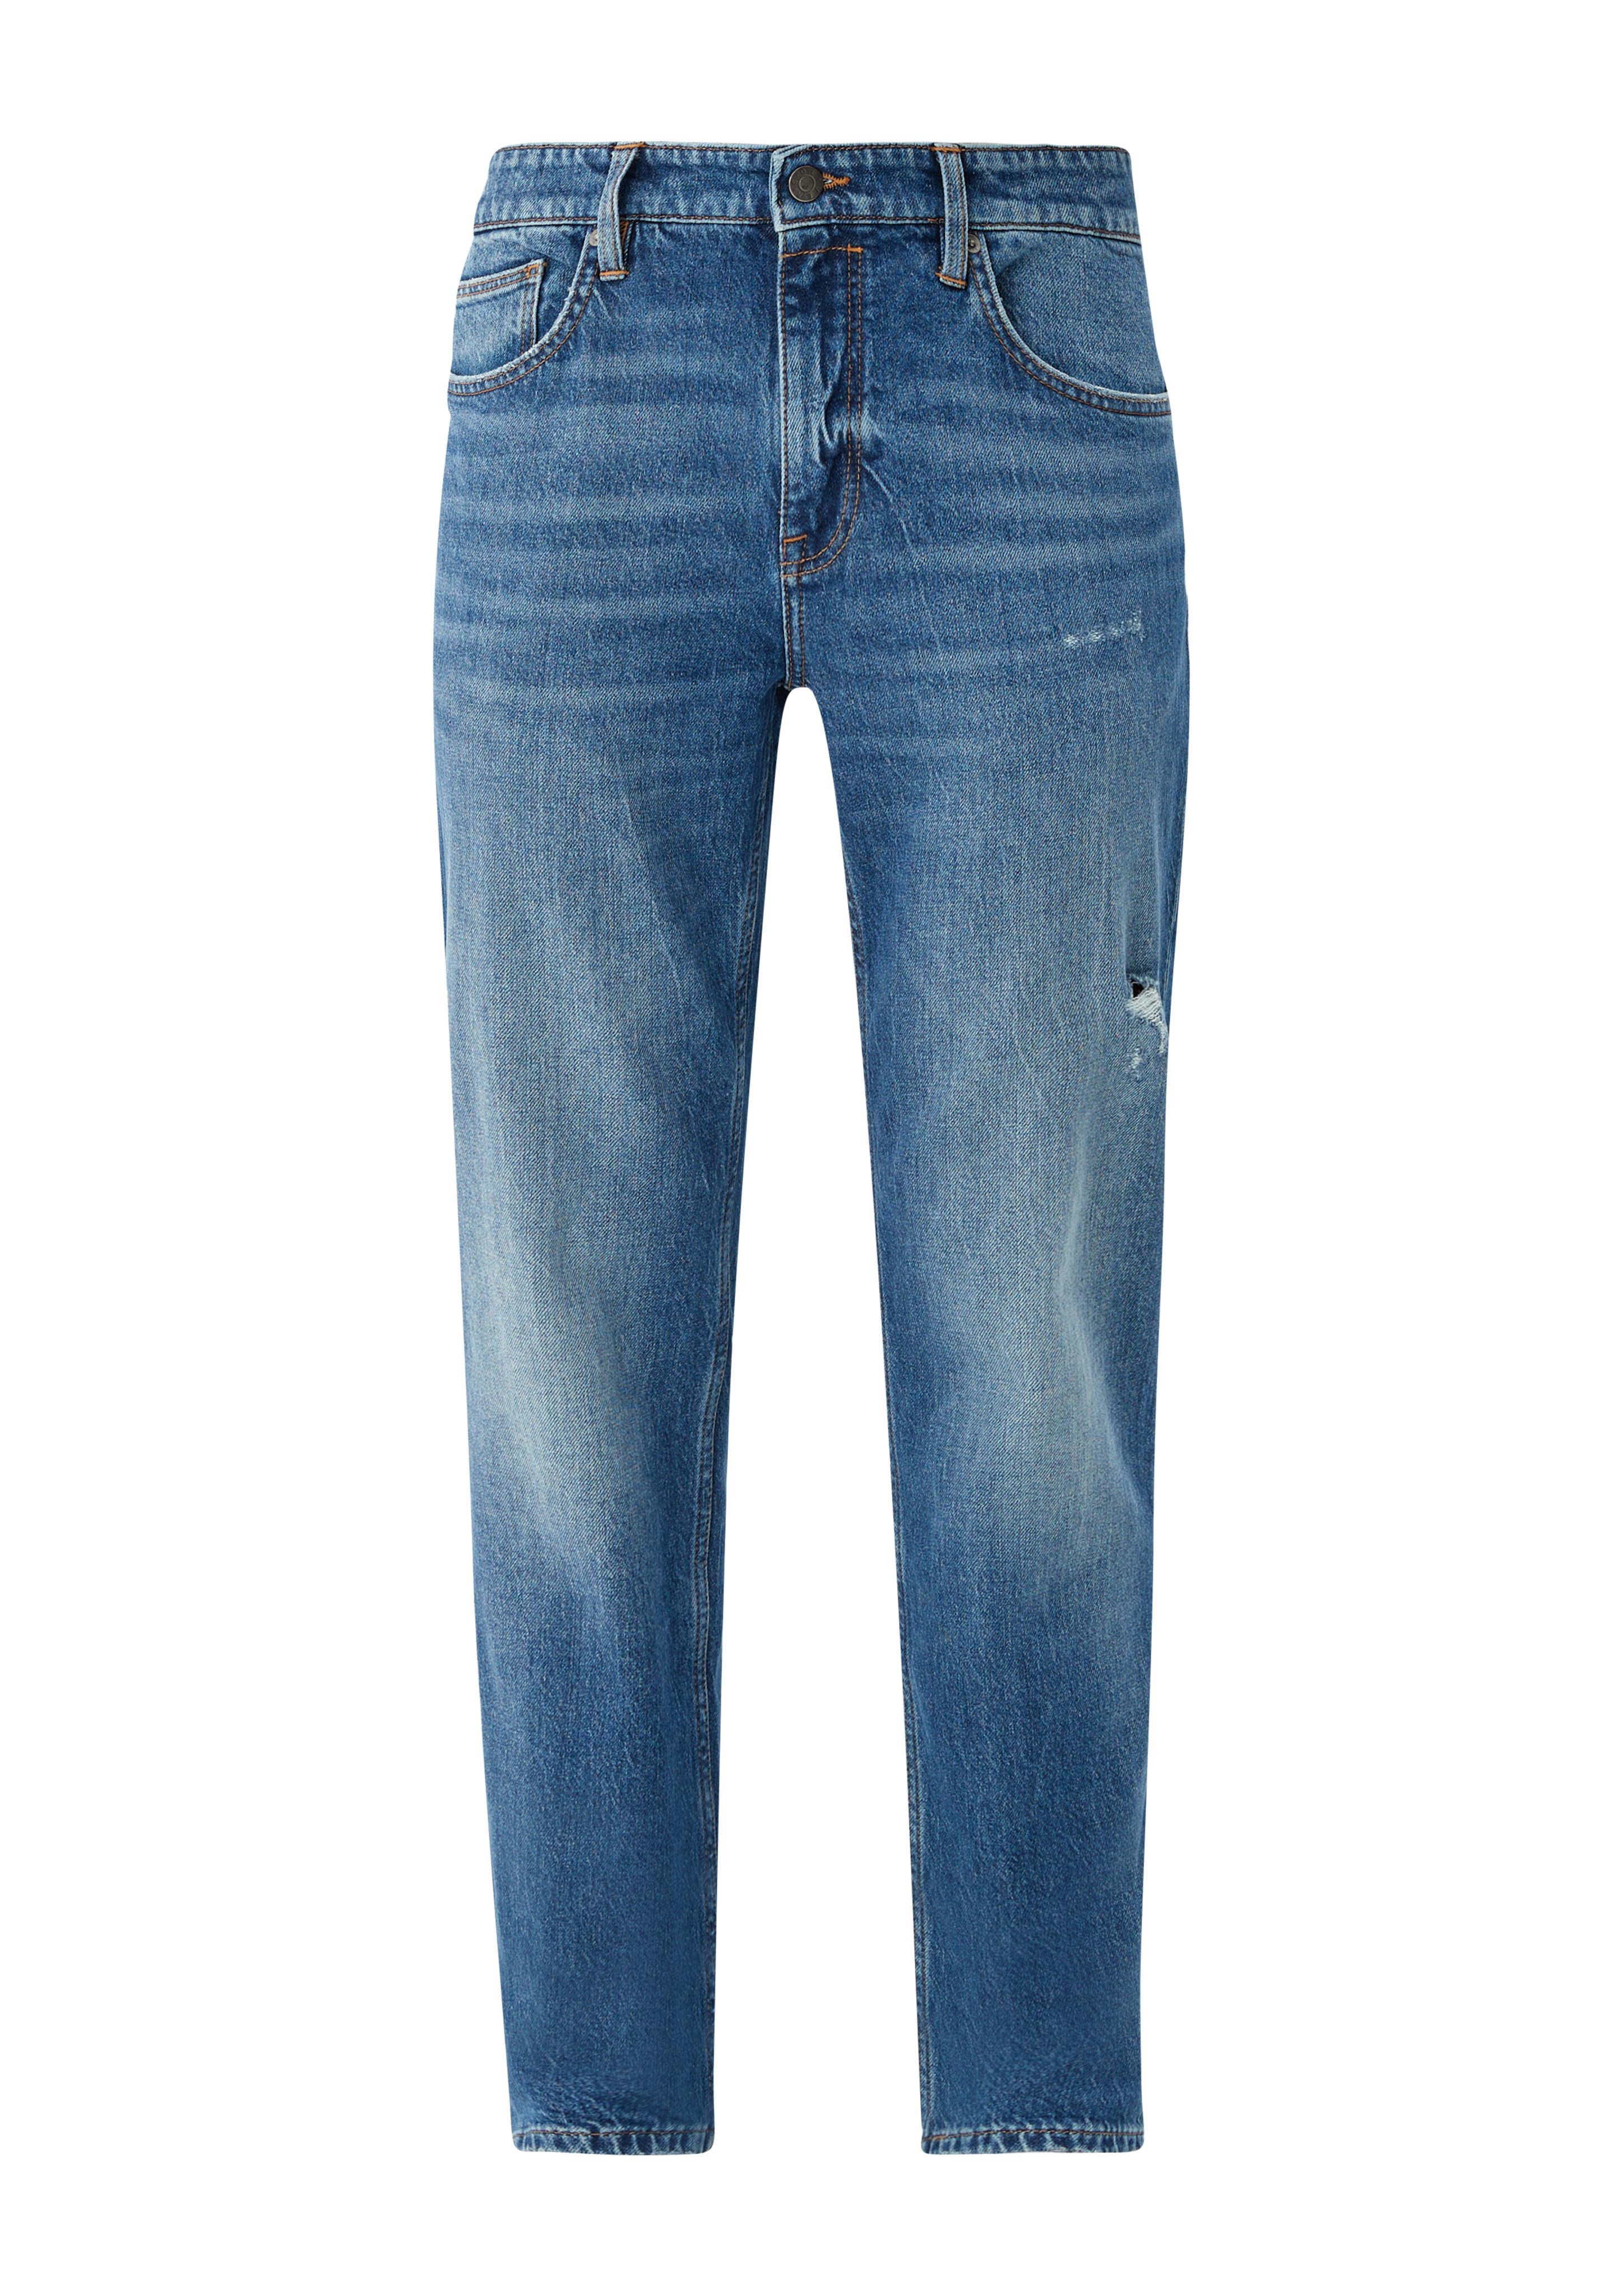 s.Oliver Stoffhose Jeans / Regular Mid Waschung, Straight / / Rise Destroyes, Leder-Patch Leg Fit